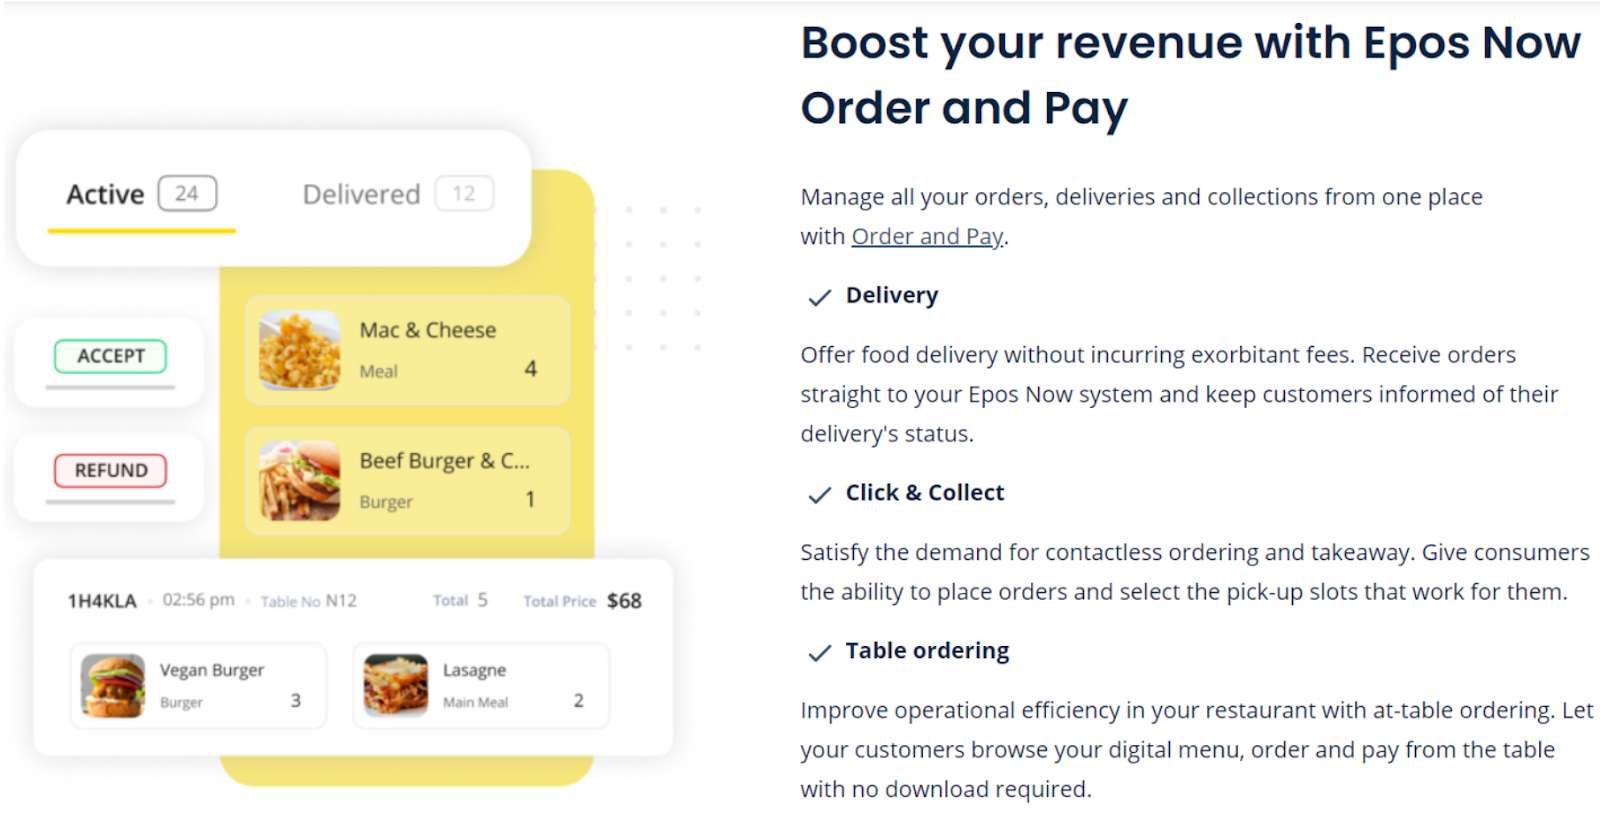 Epos Now ordering options for restaurants